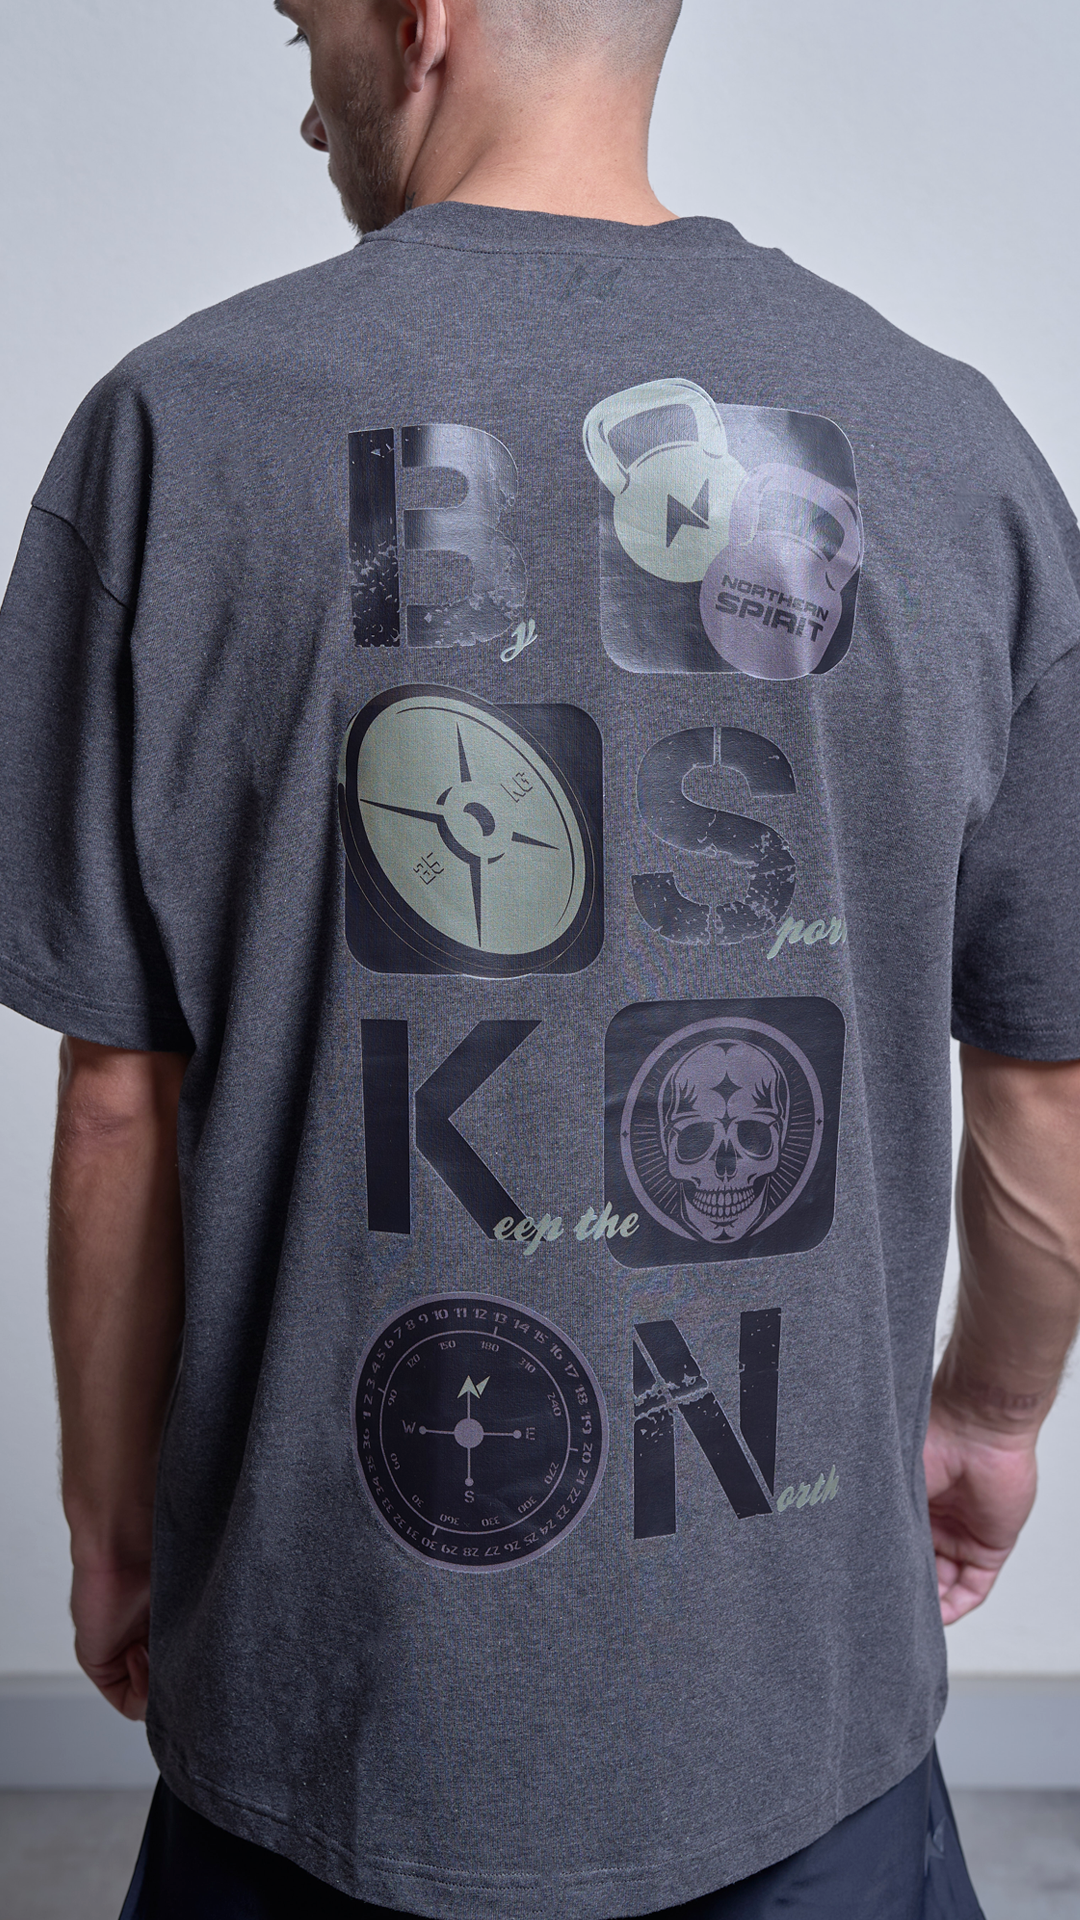 T-shirt - NS Smurf BSKN "Keyplay"